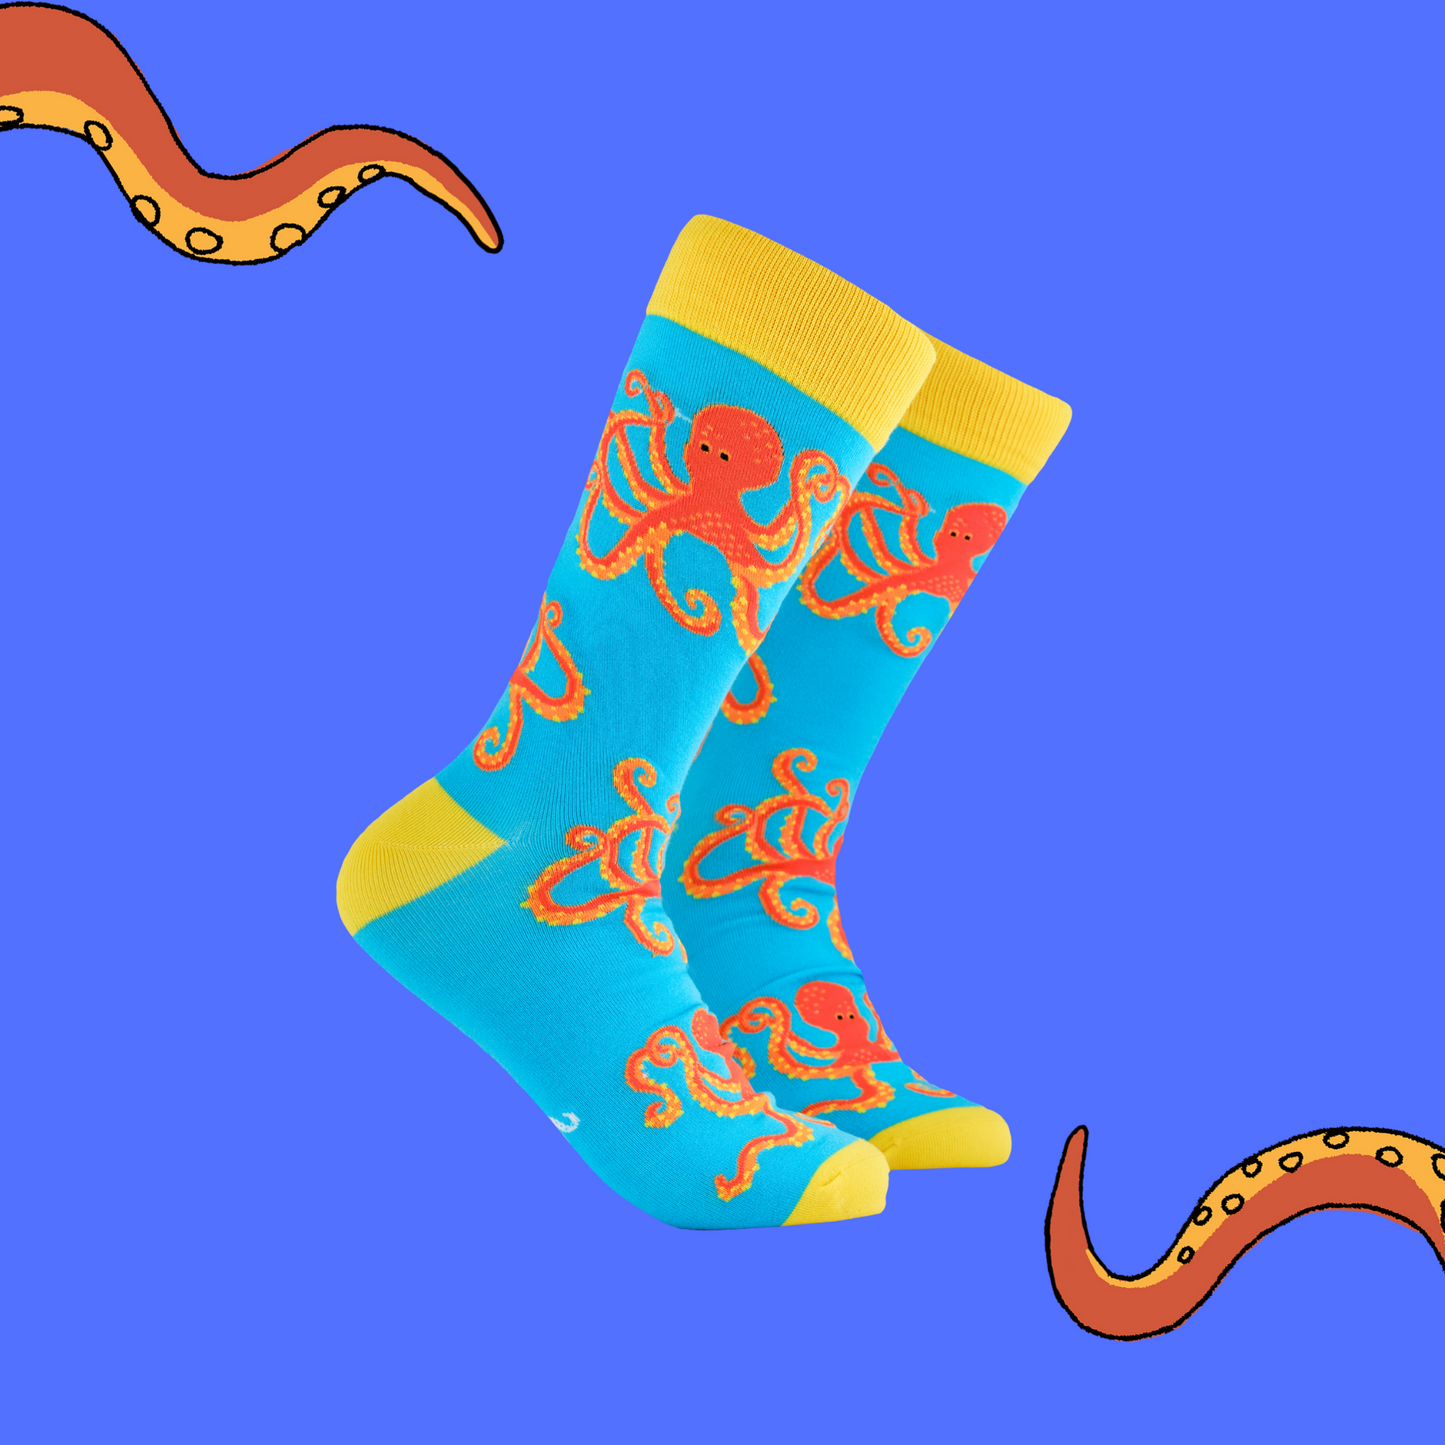 A pair of socks depicting the soctopus mascot, Captain Soctopus. Blue legs, yellow cuff, heel and toe.